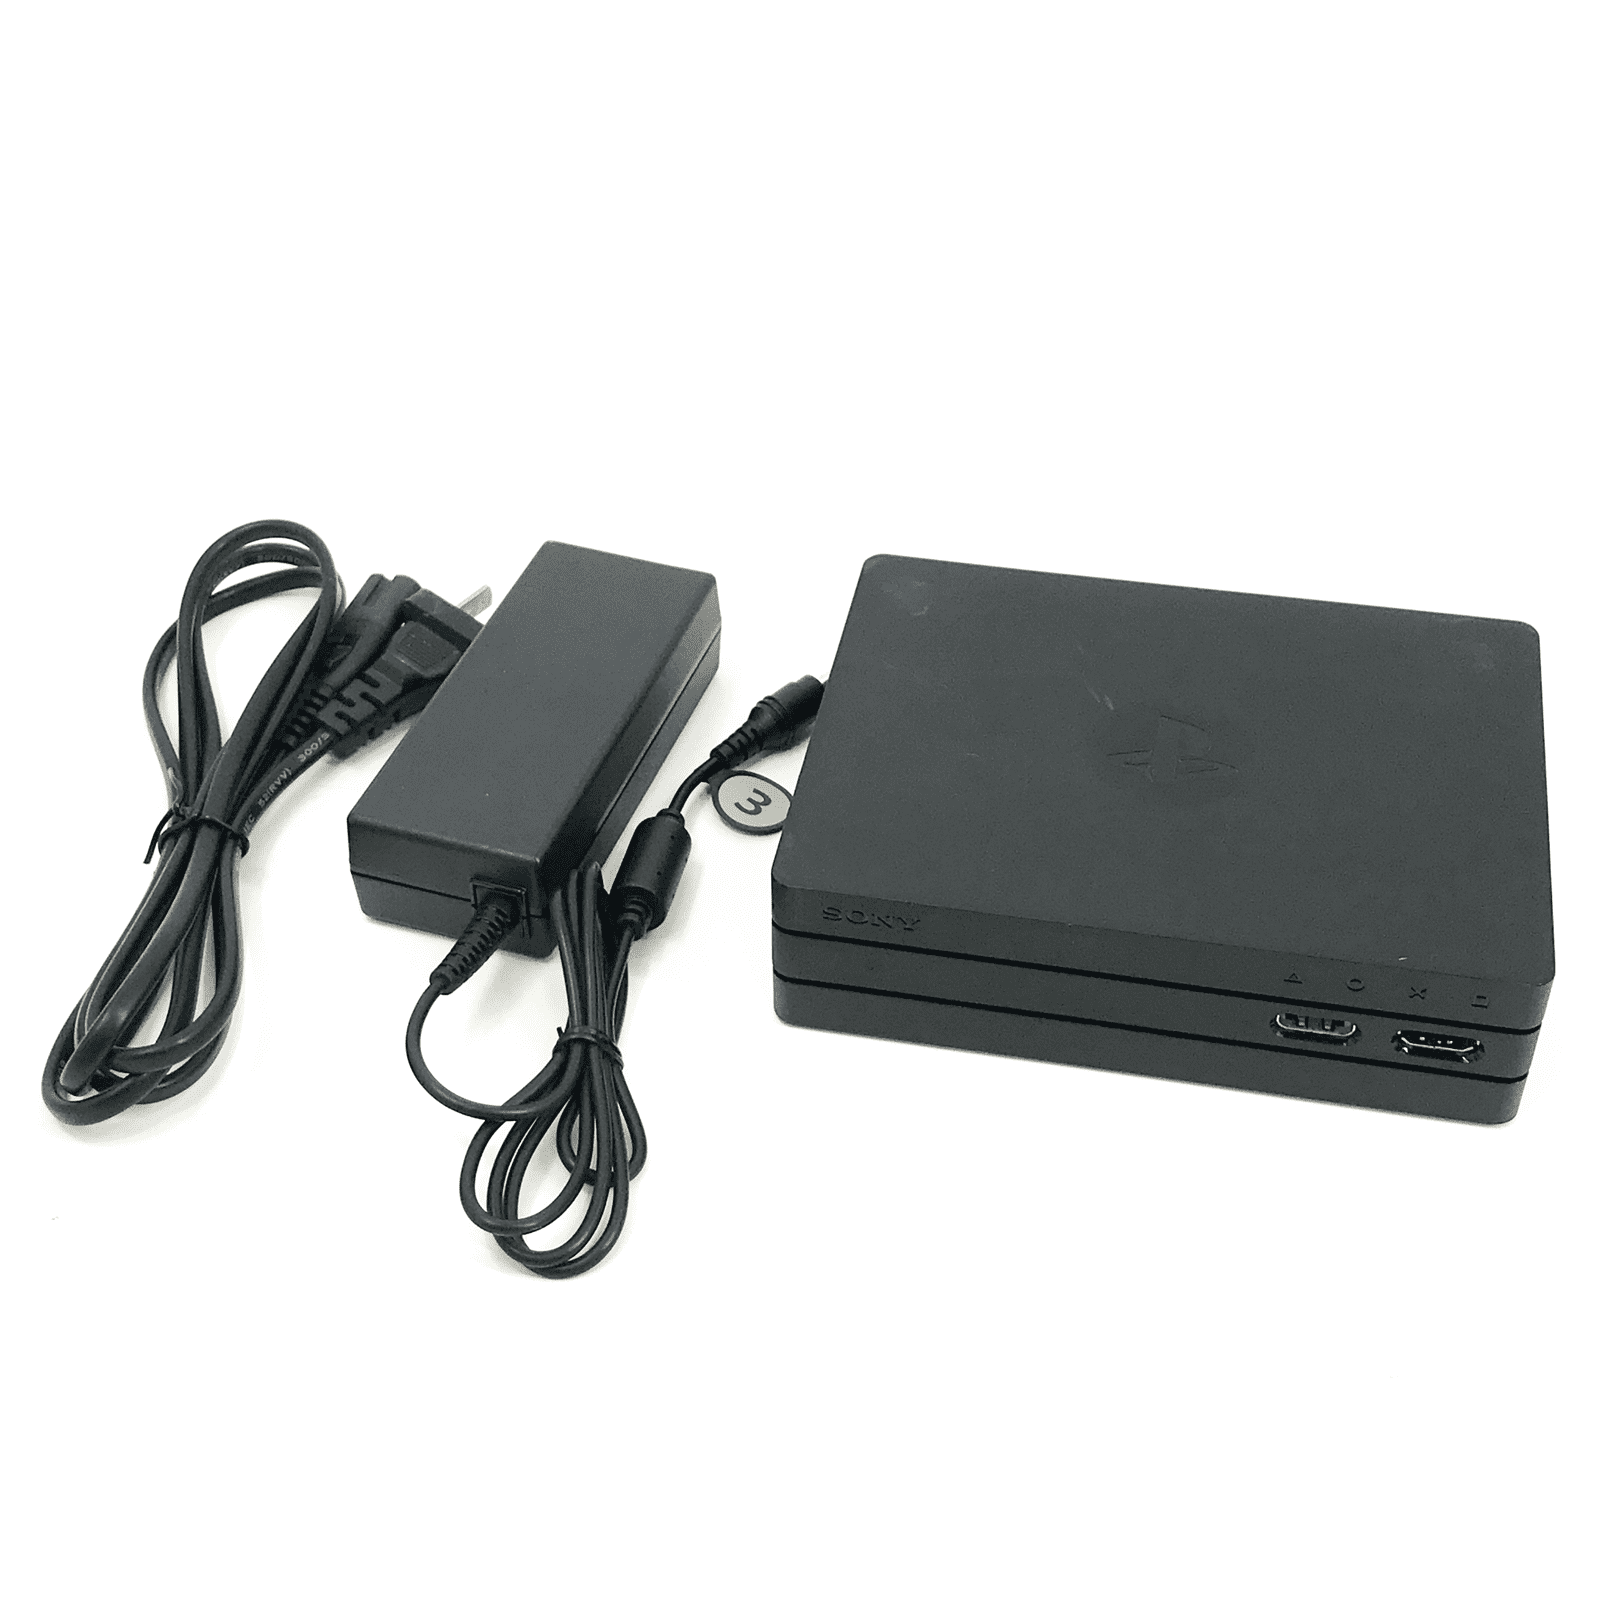 Genuine Sony Playstation VR PS4 CUH-ZVR2 Processor Unit w/Power Adapter  CUH-ZAC1 Used No Box